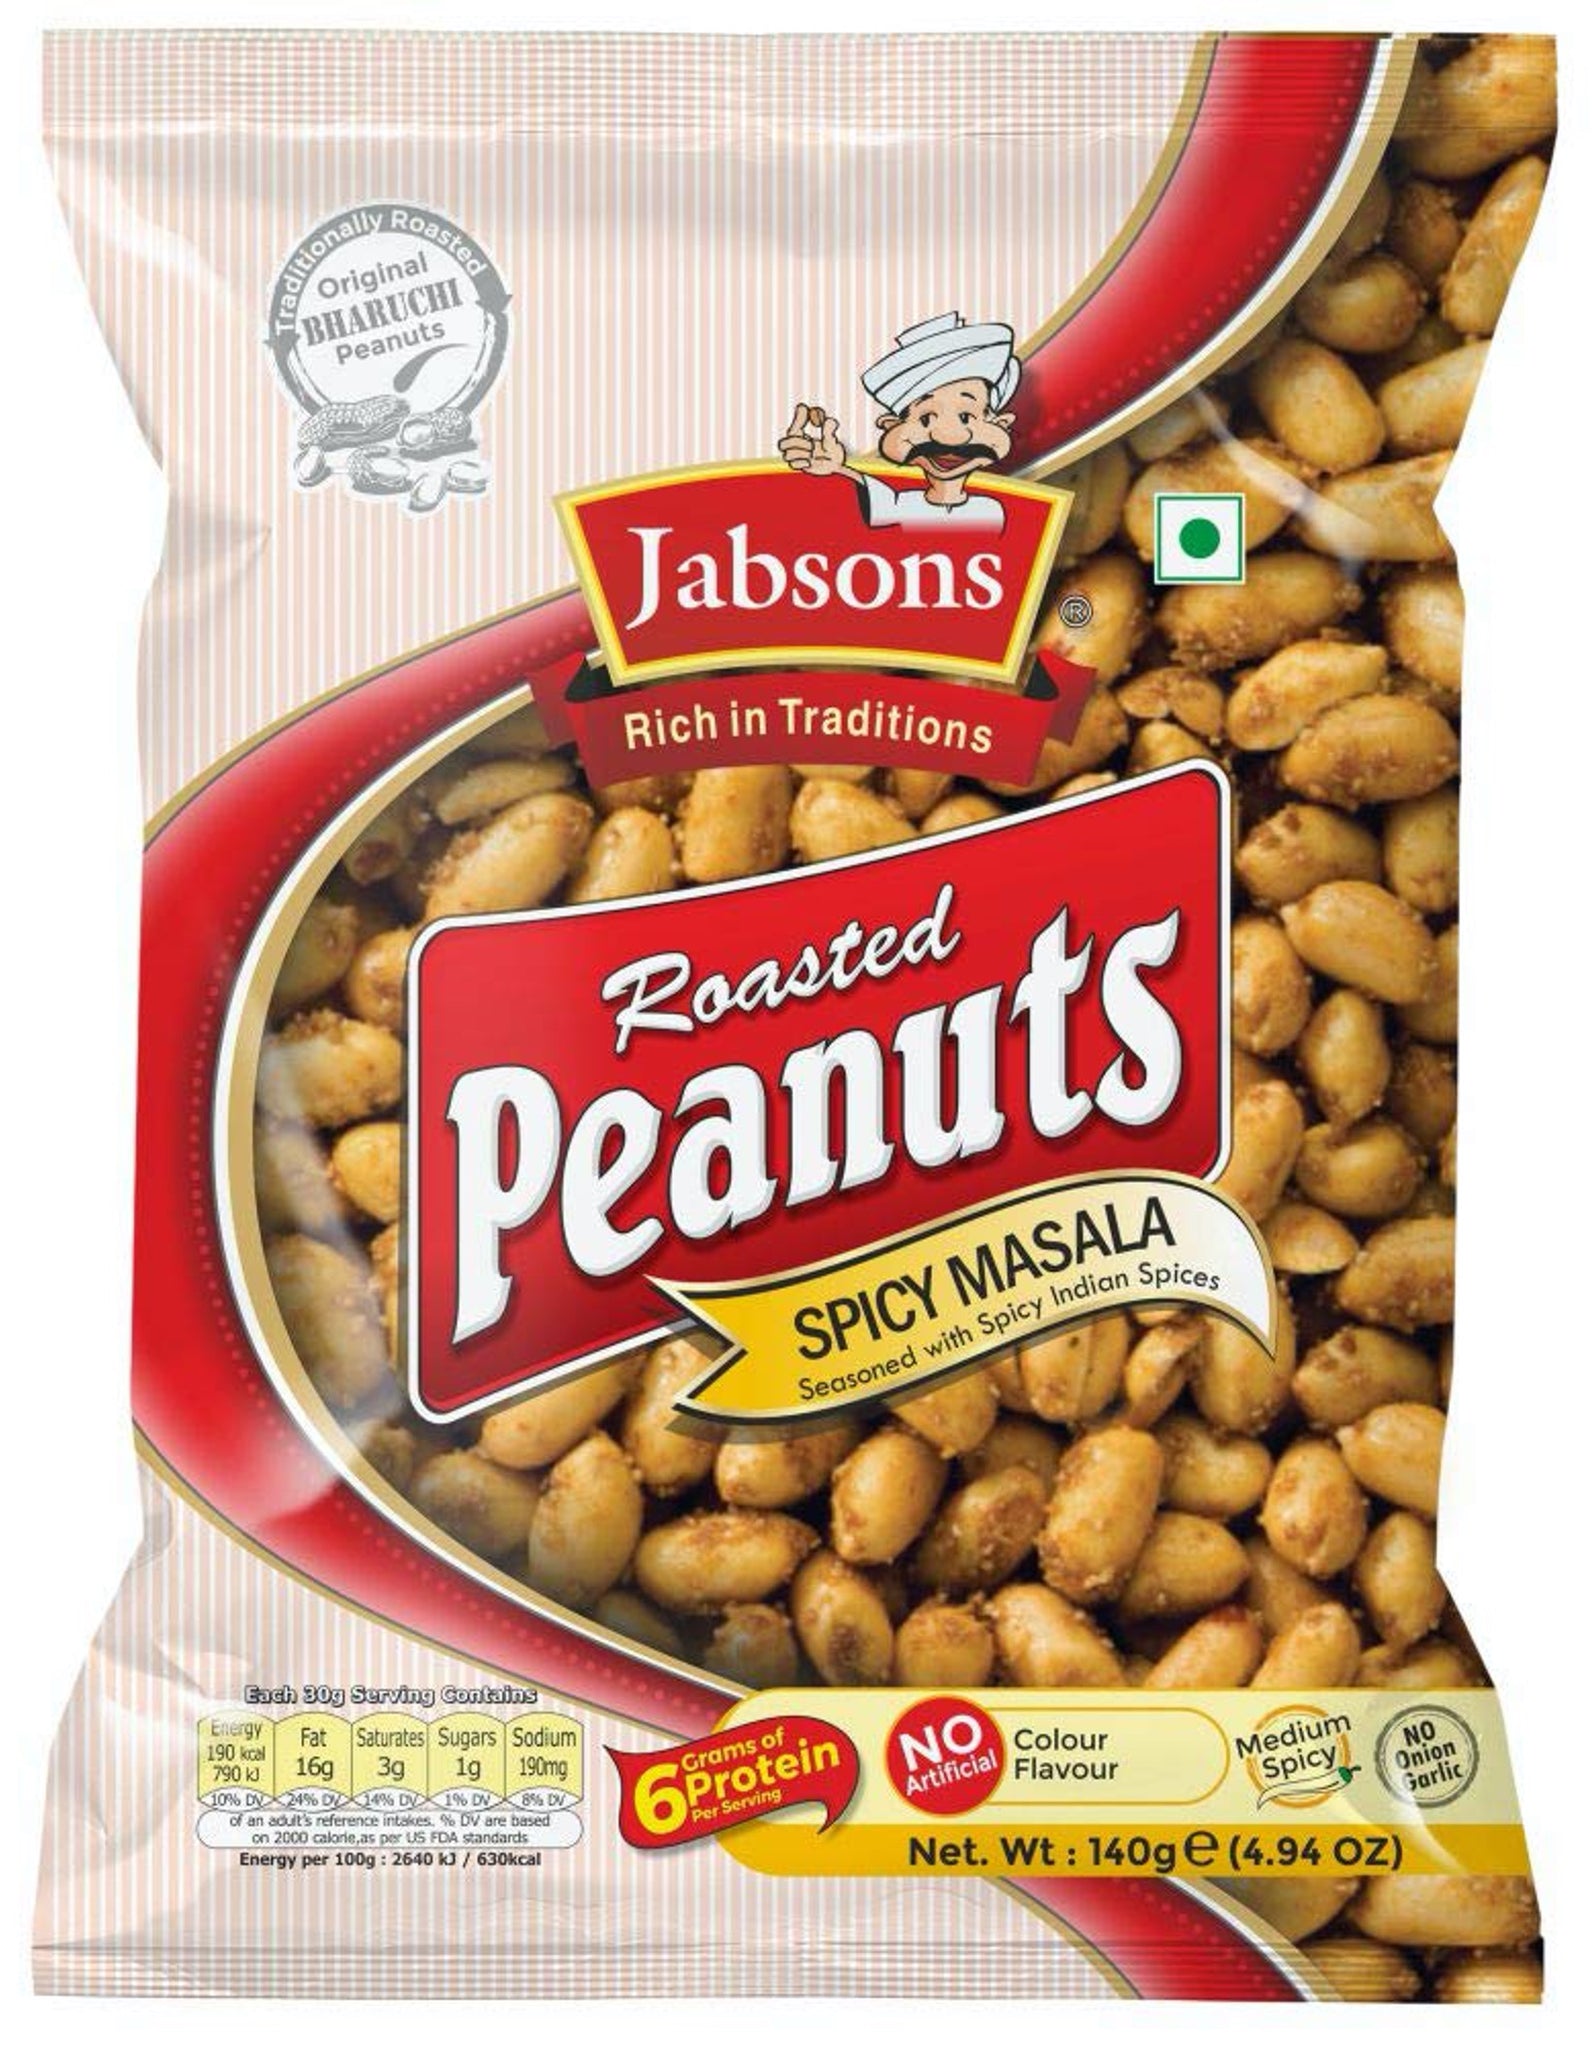 Roasted Peanuts (Spicy Masala)